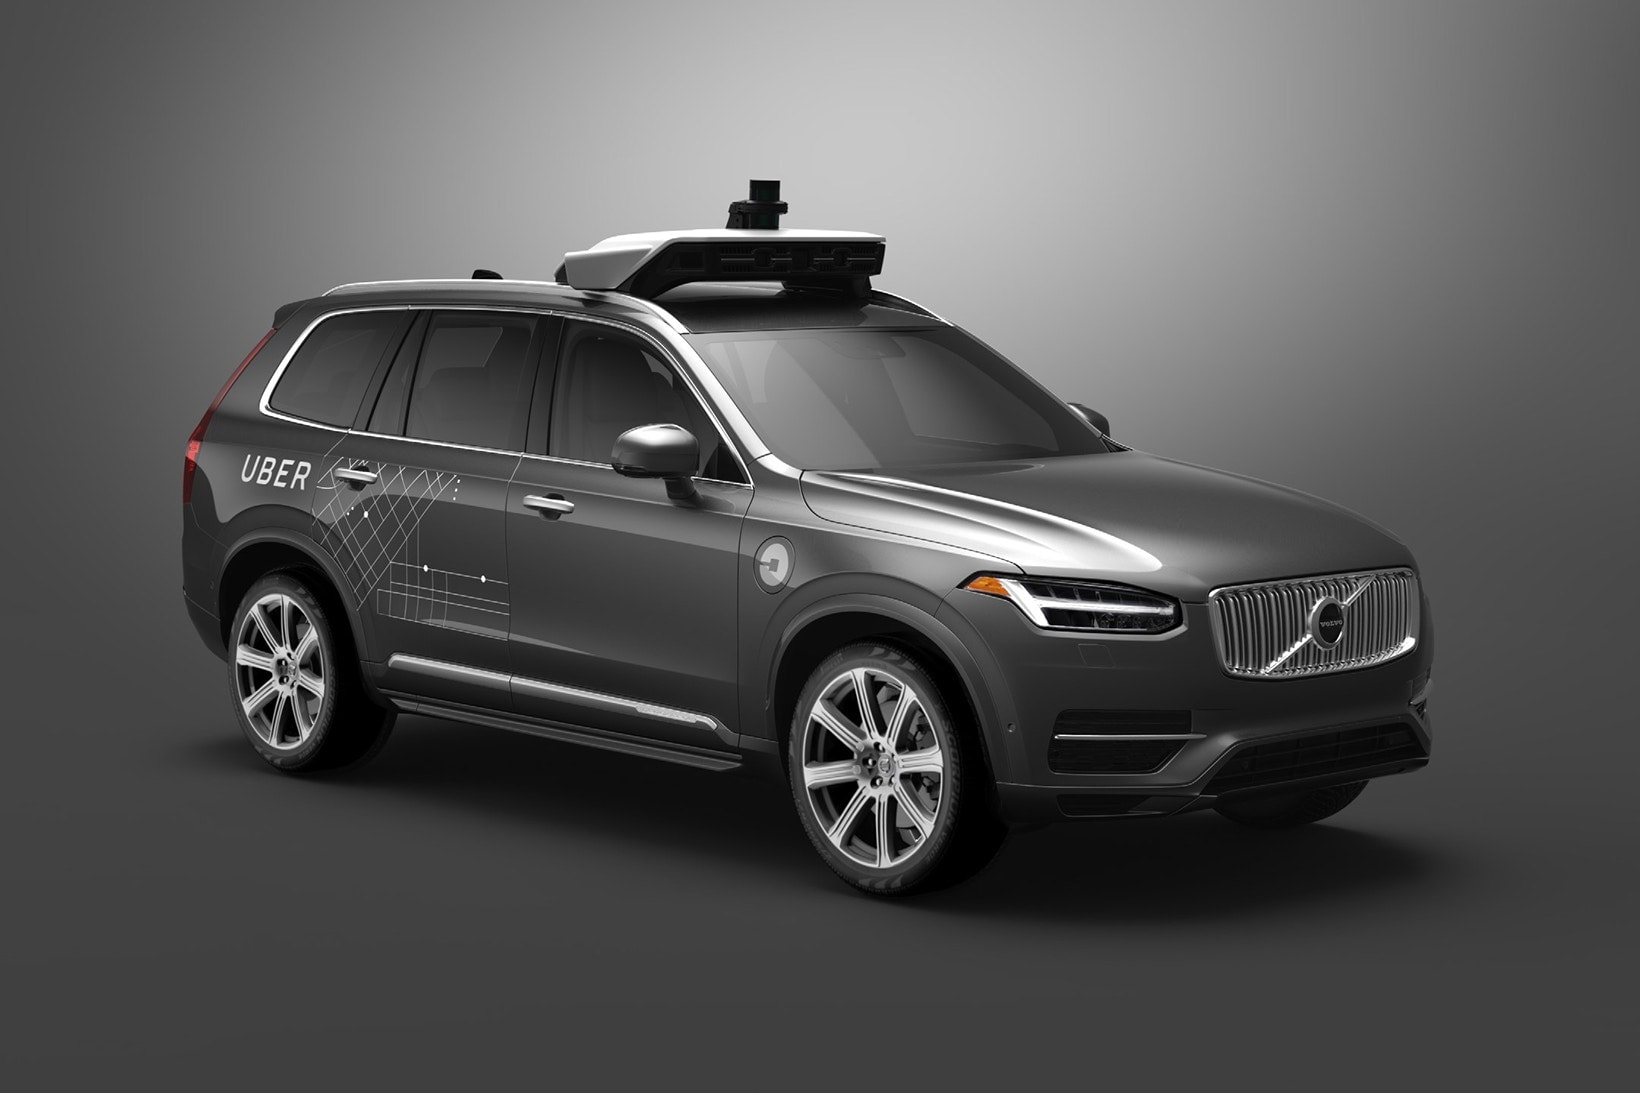 Uber Volvo XC90 Deal Driveless Autonomous 24000 Cars automobiles automotive 2019 2021 Delivery 1 Billion USD Dollars 2017 November 20 24,000